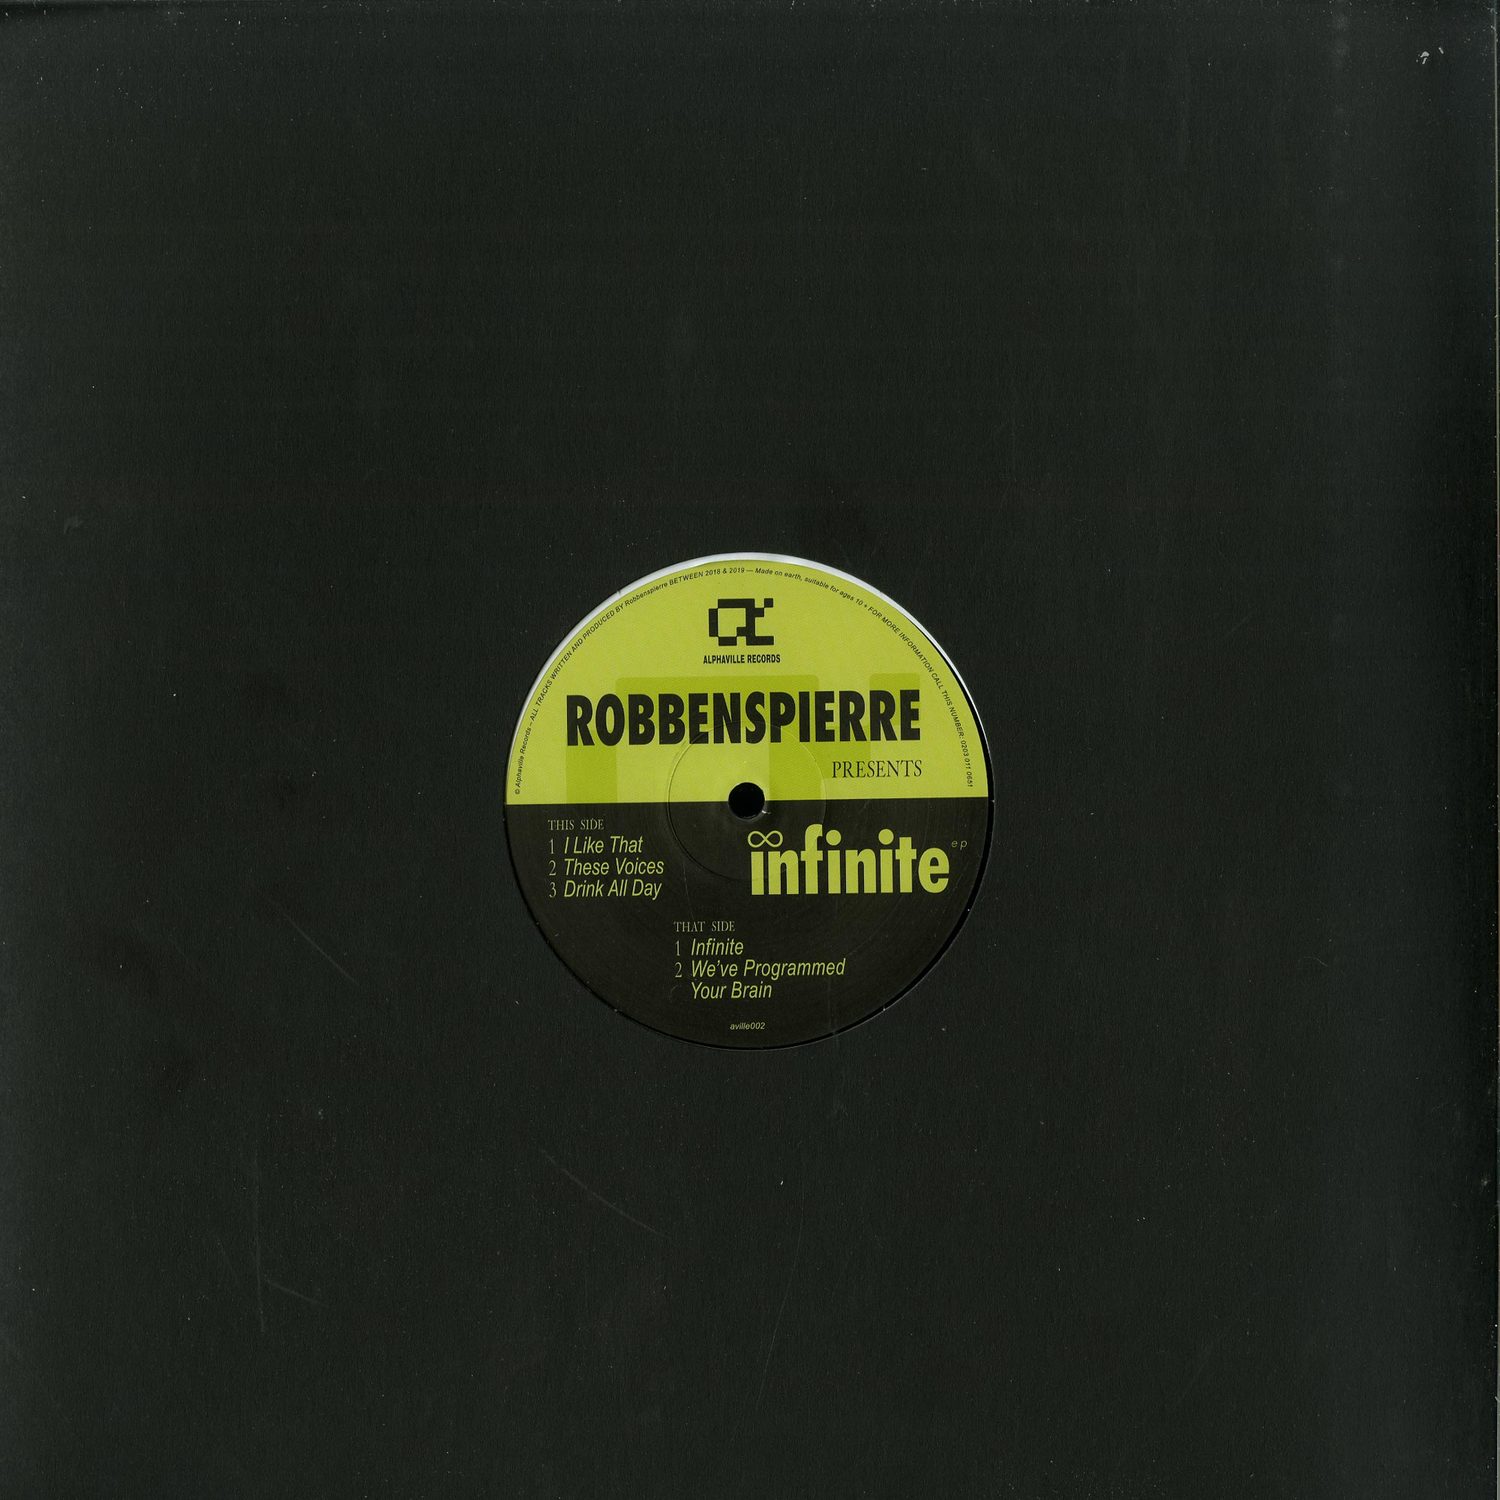 Robbenspierre - INFINITE EP